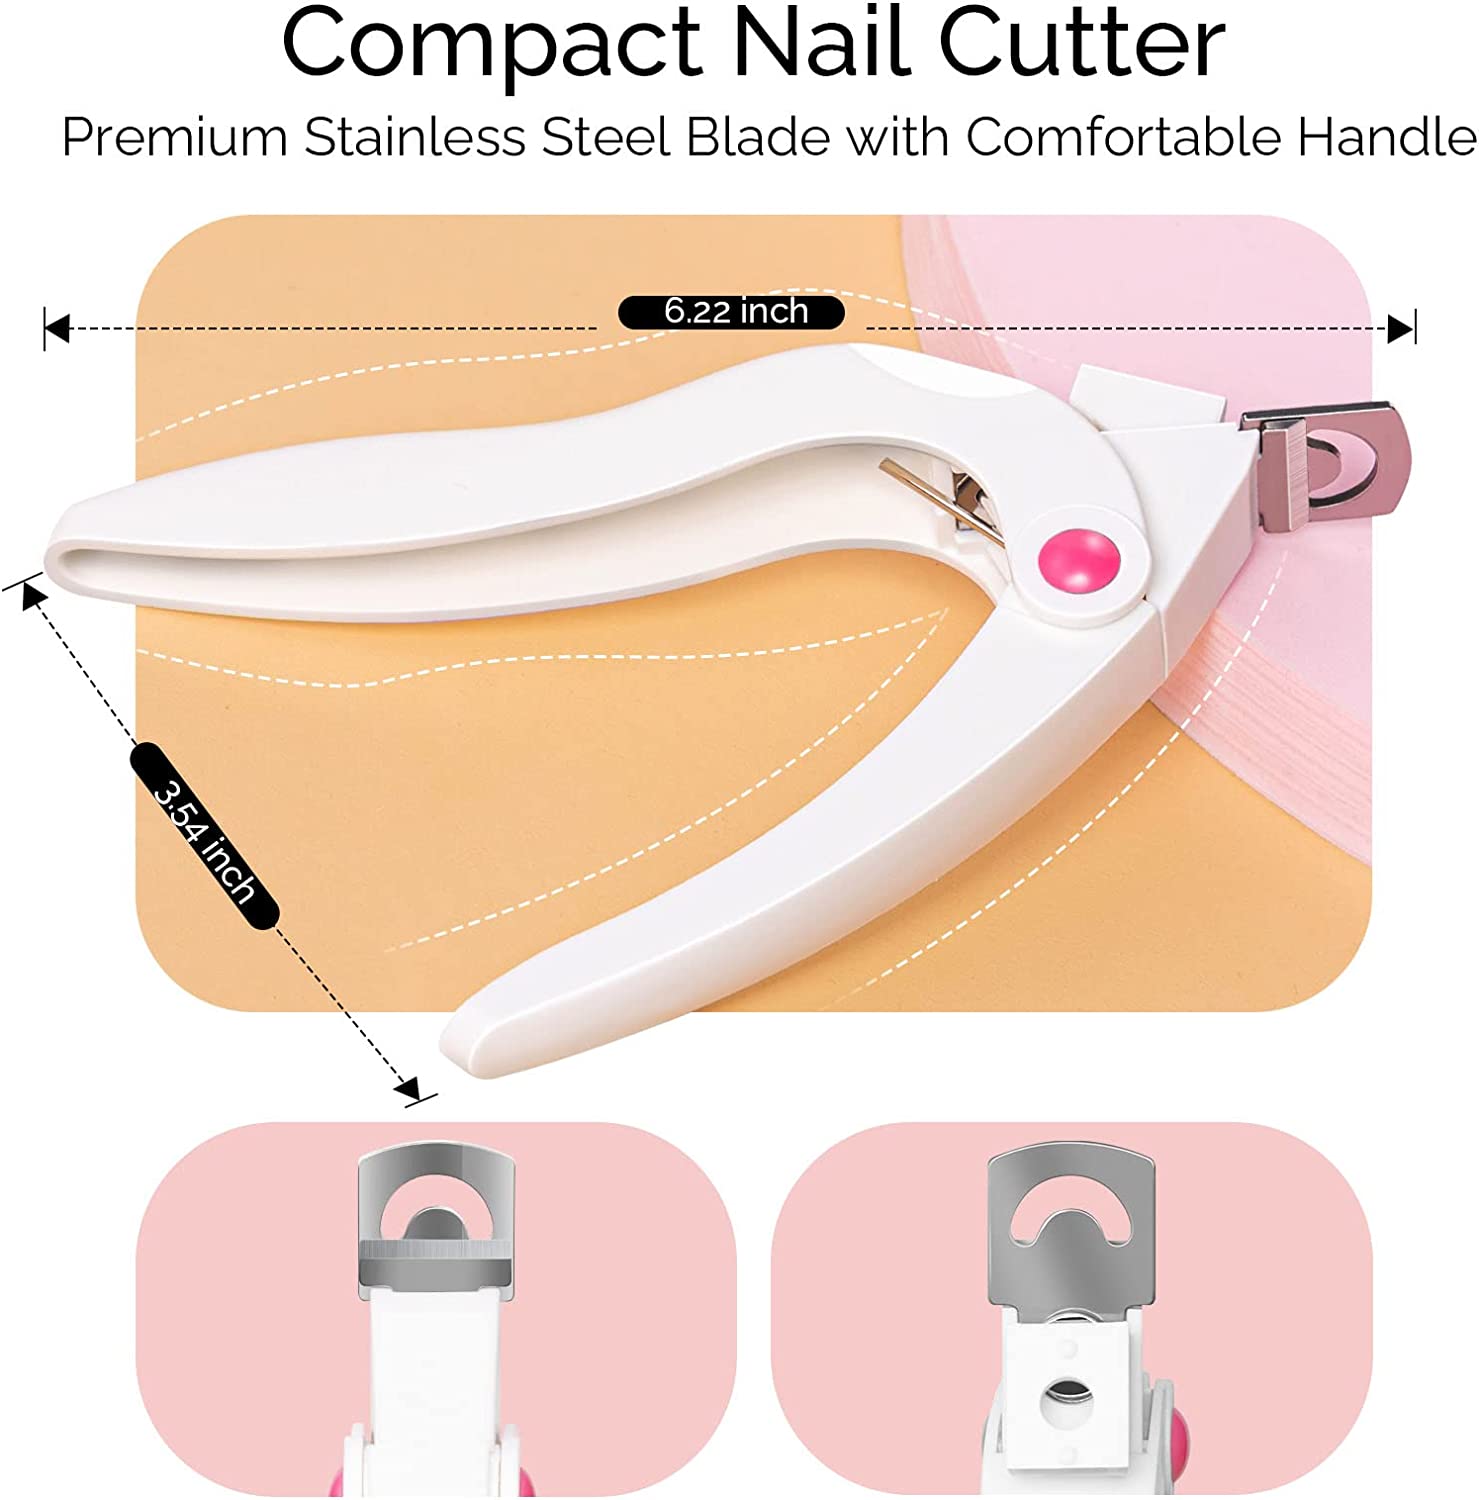 Acrylic Tip Nail Cutter B/G - INSTUMAX®